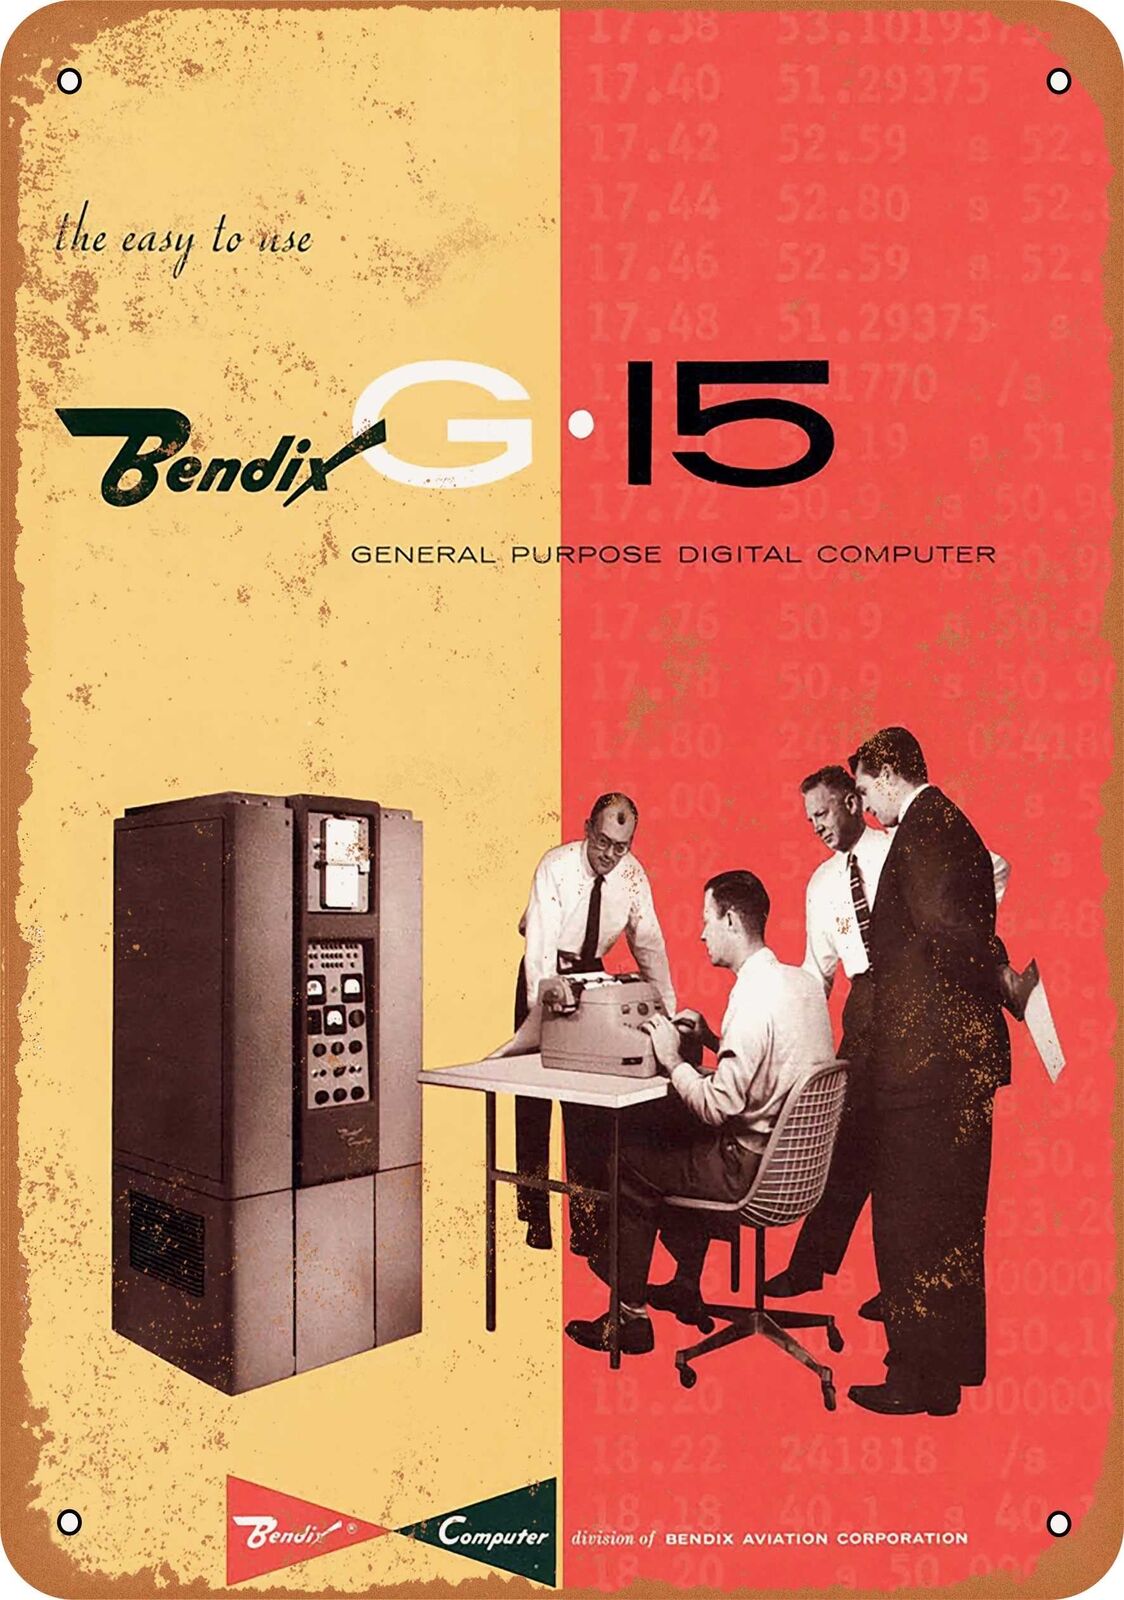 Metal Sign - 1955 Bendix G-15 Digital Computer - Vintage Look Reproduction